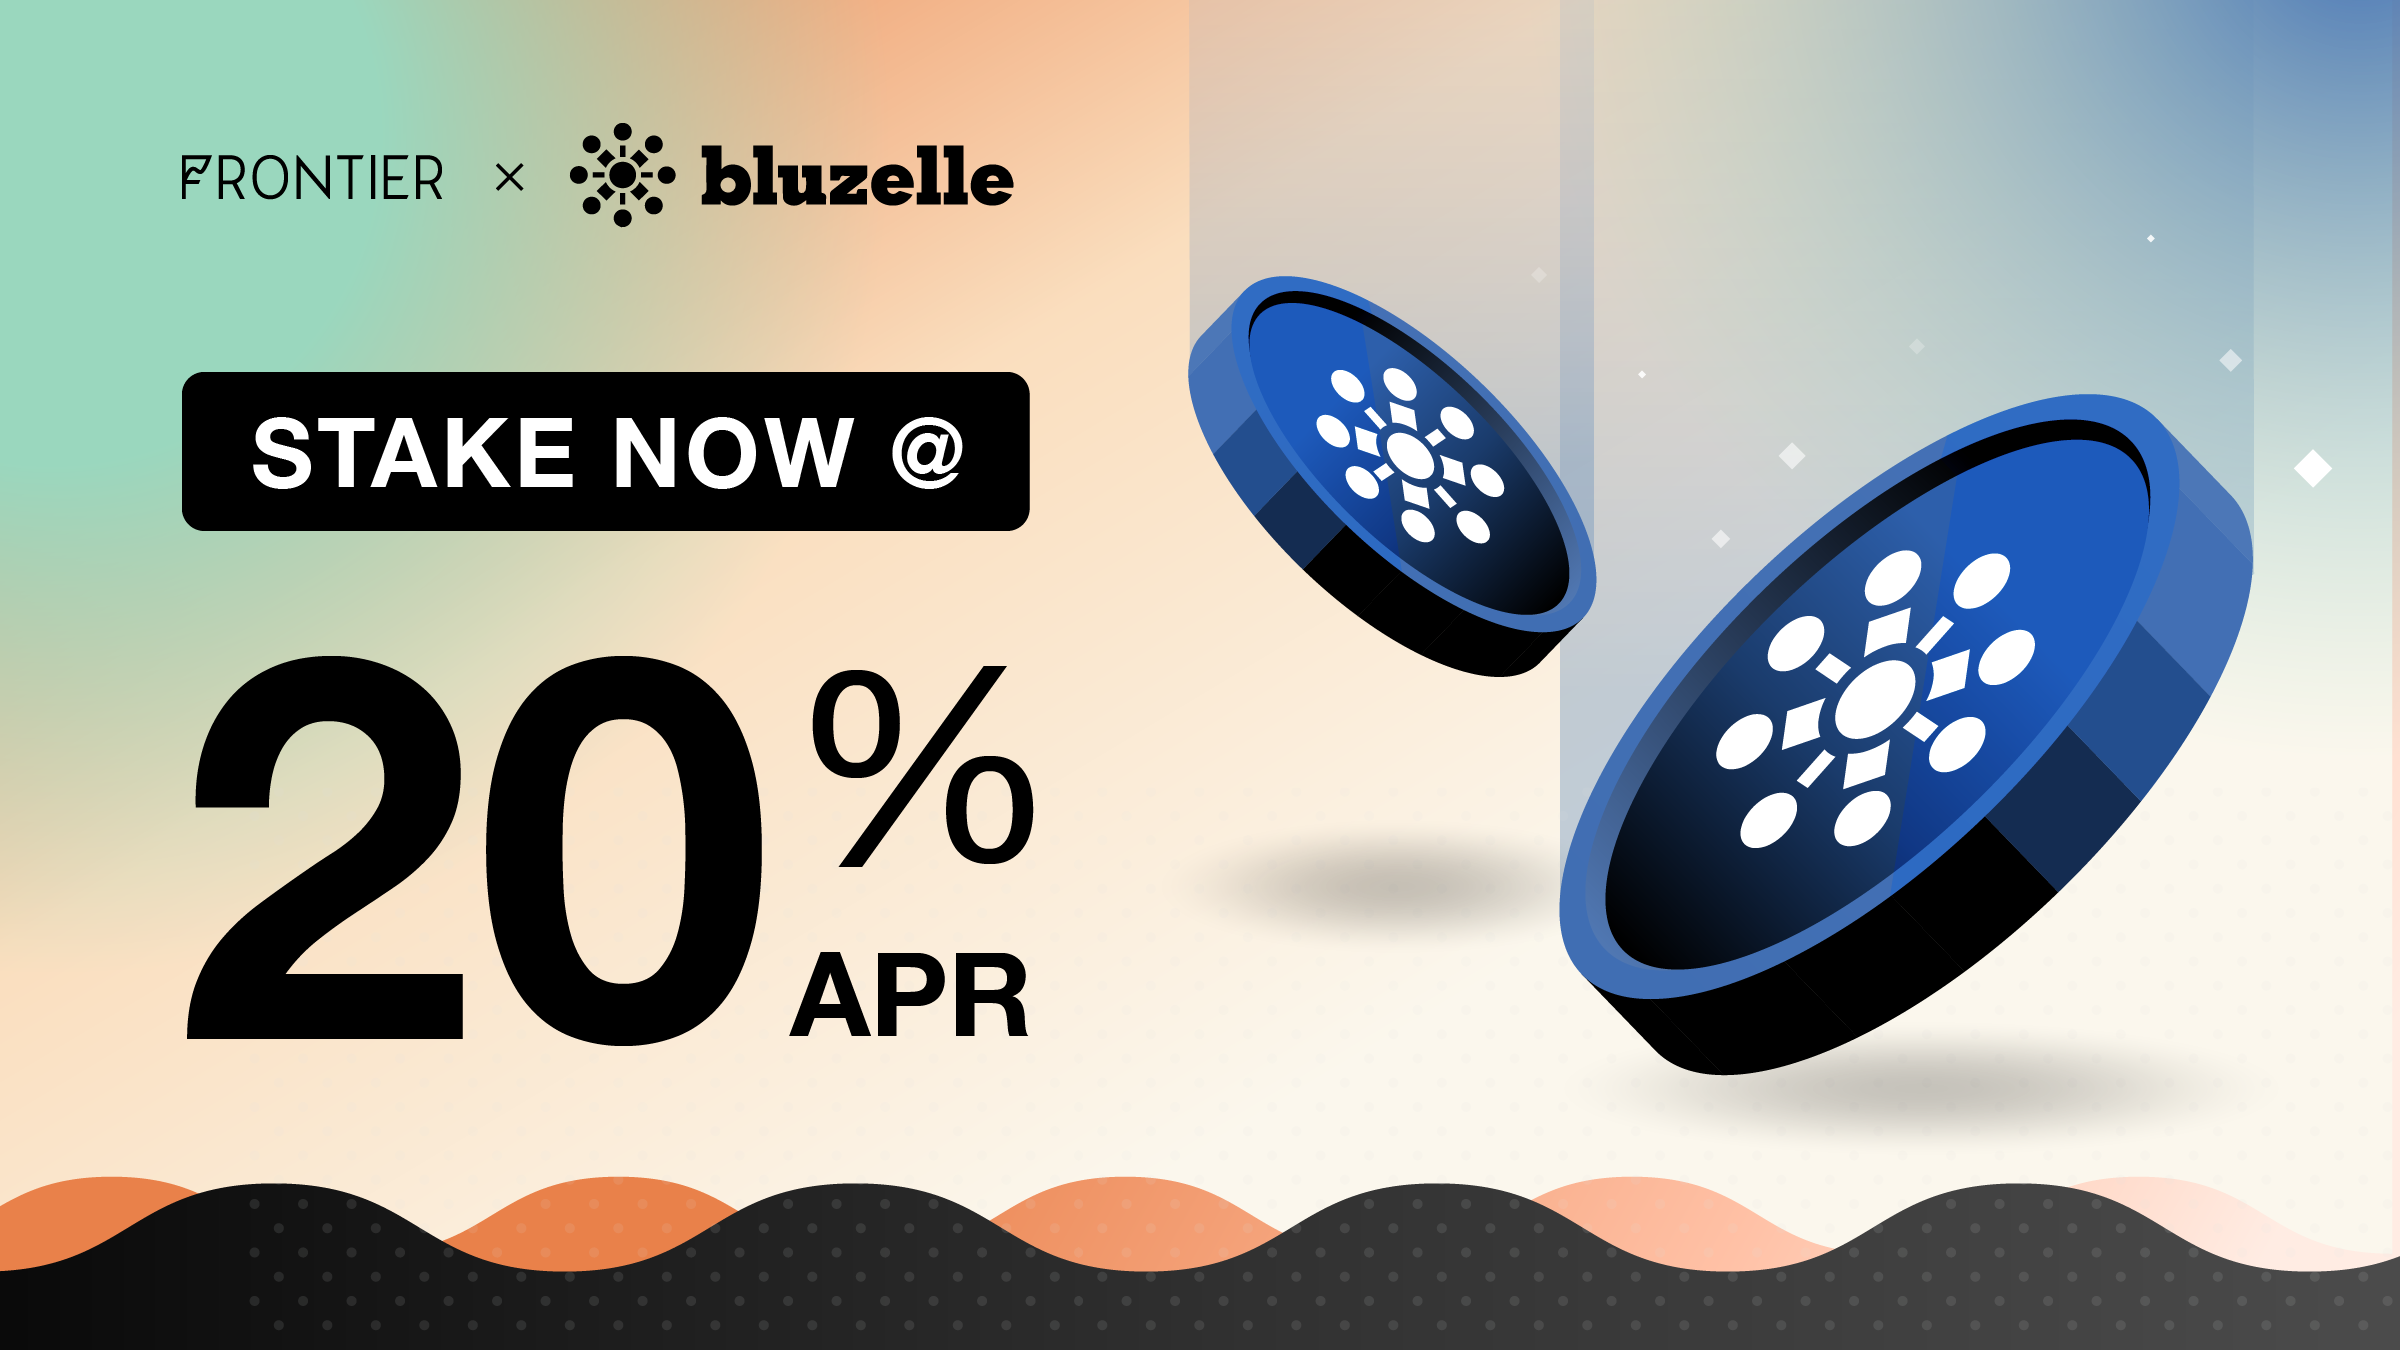 Bluzelle price today, BLZ to USD live price, marketcap and chart | CoinMarketCap